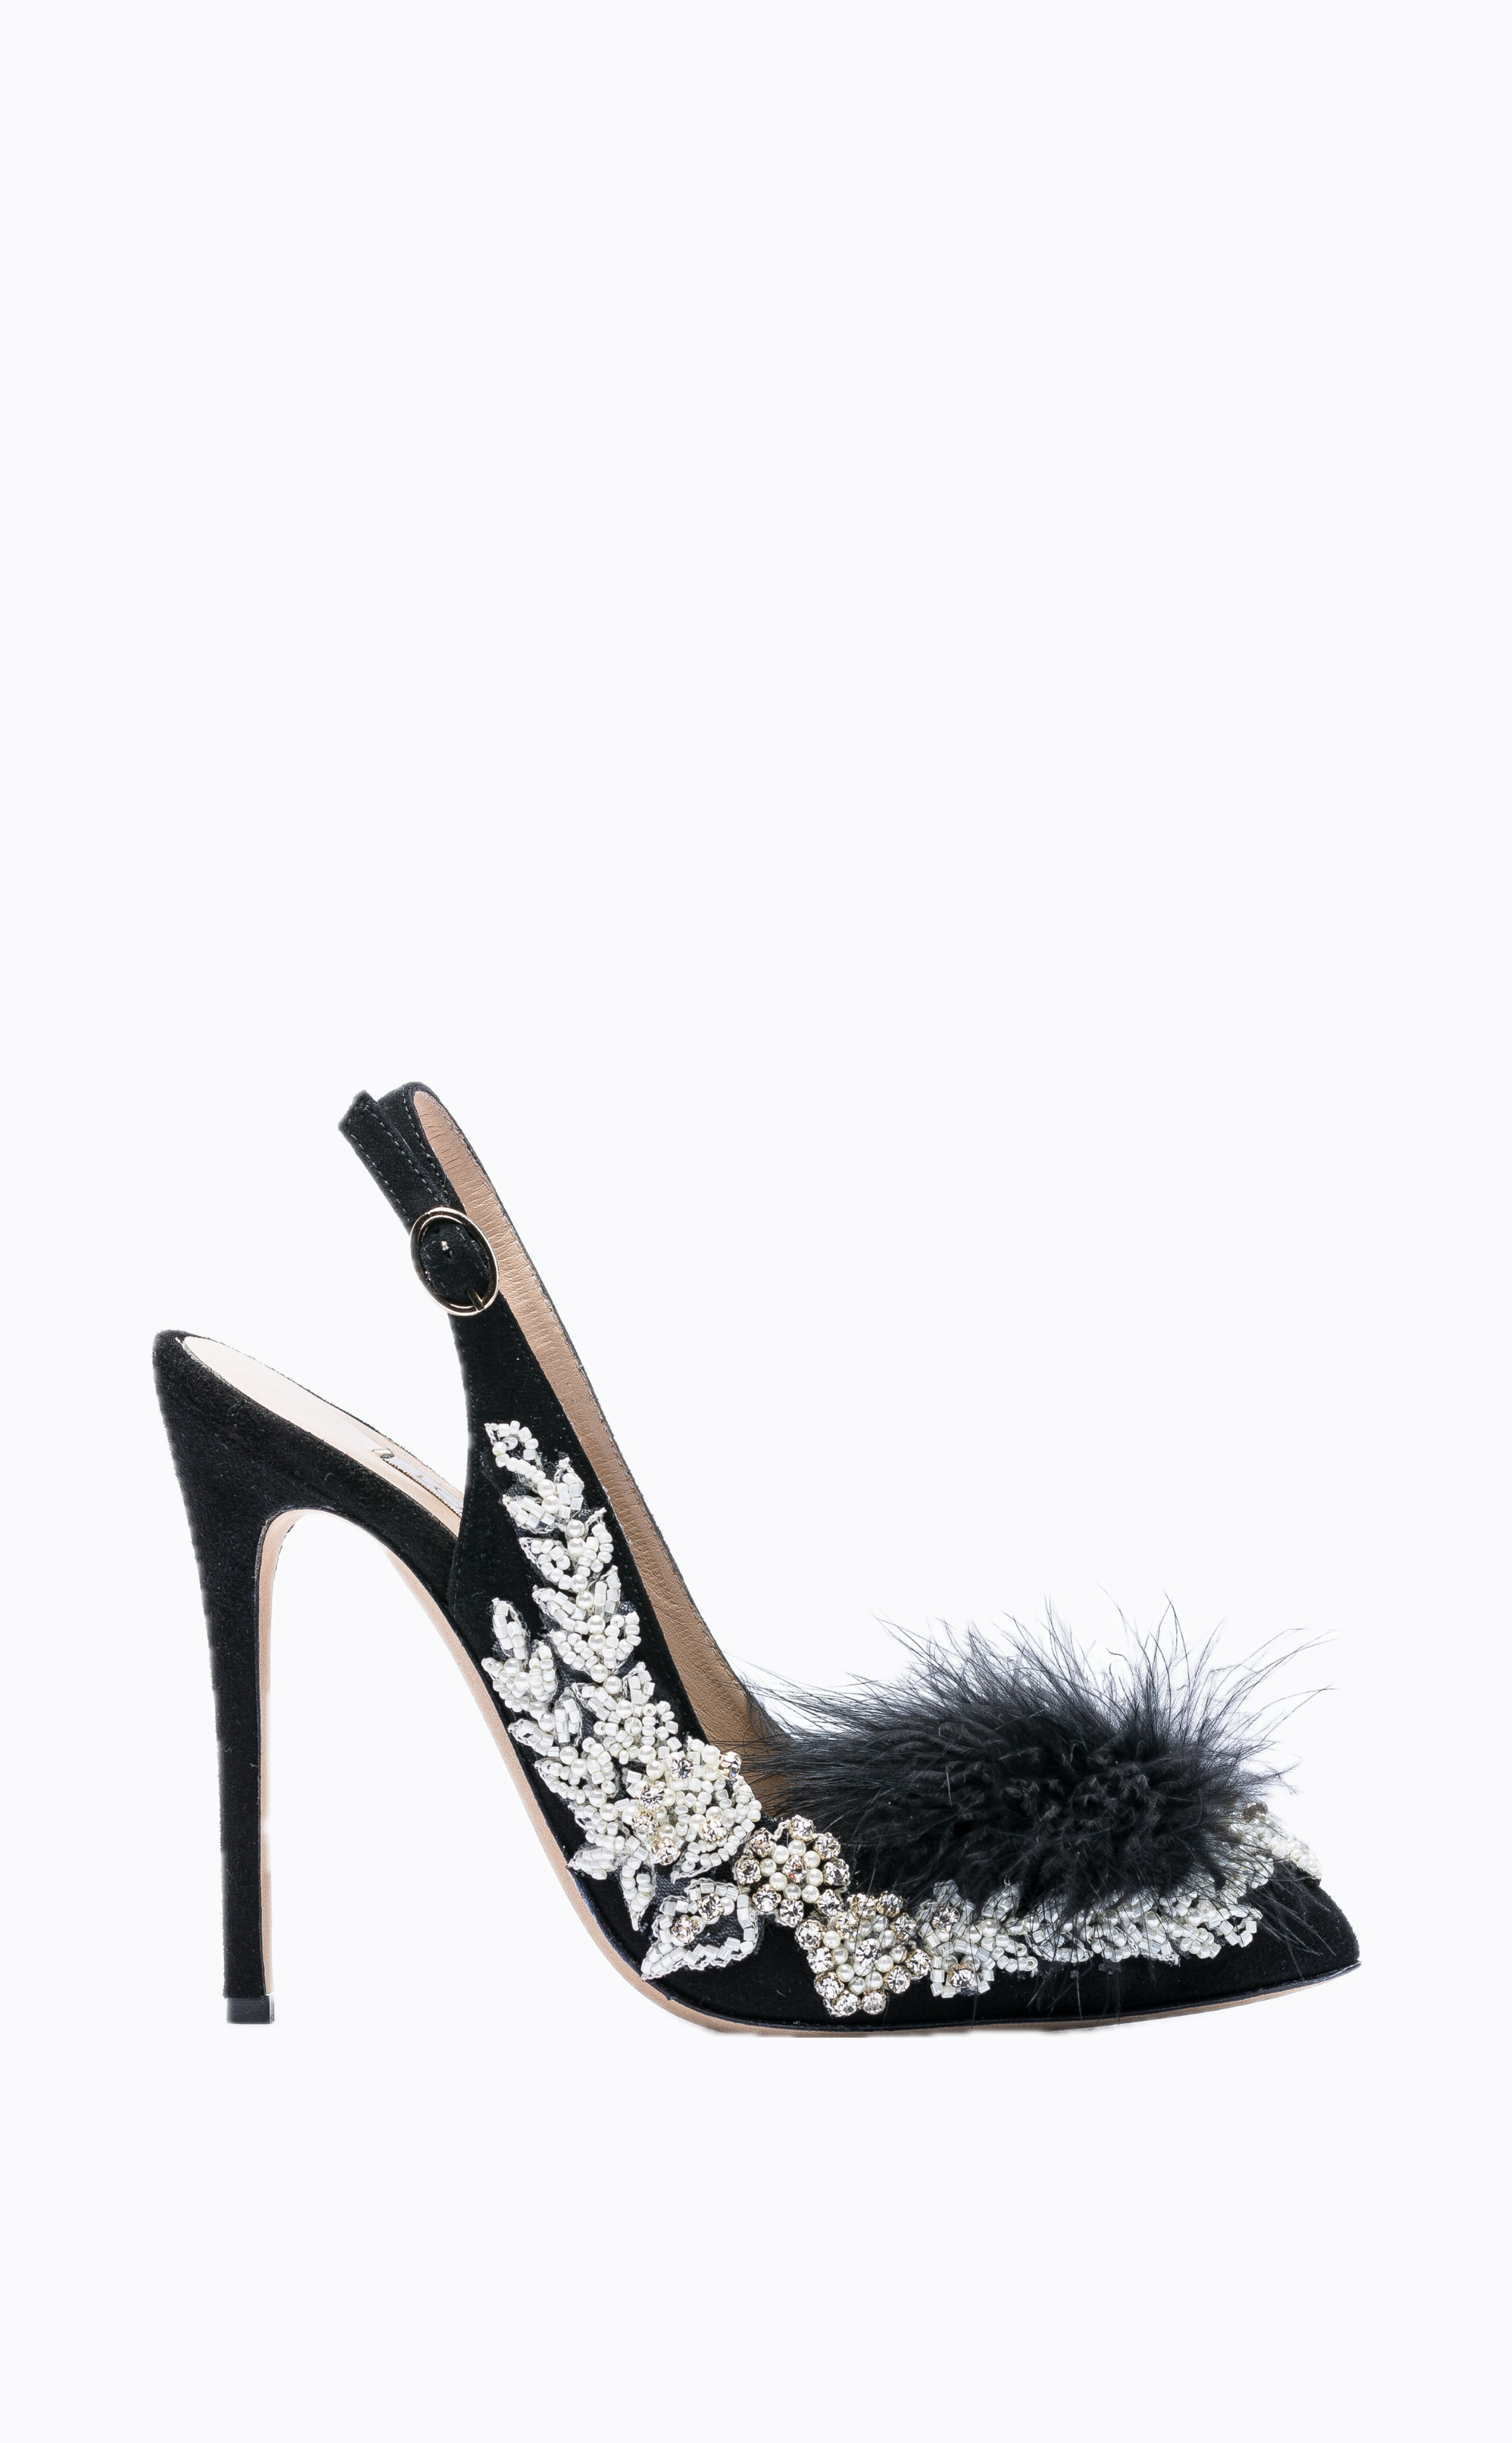 Obsidian Elegance Heels